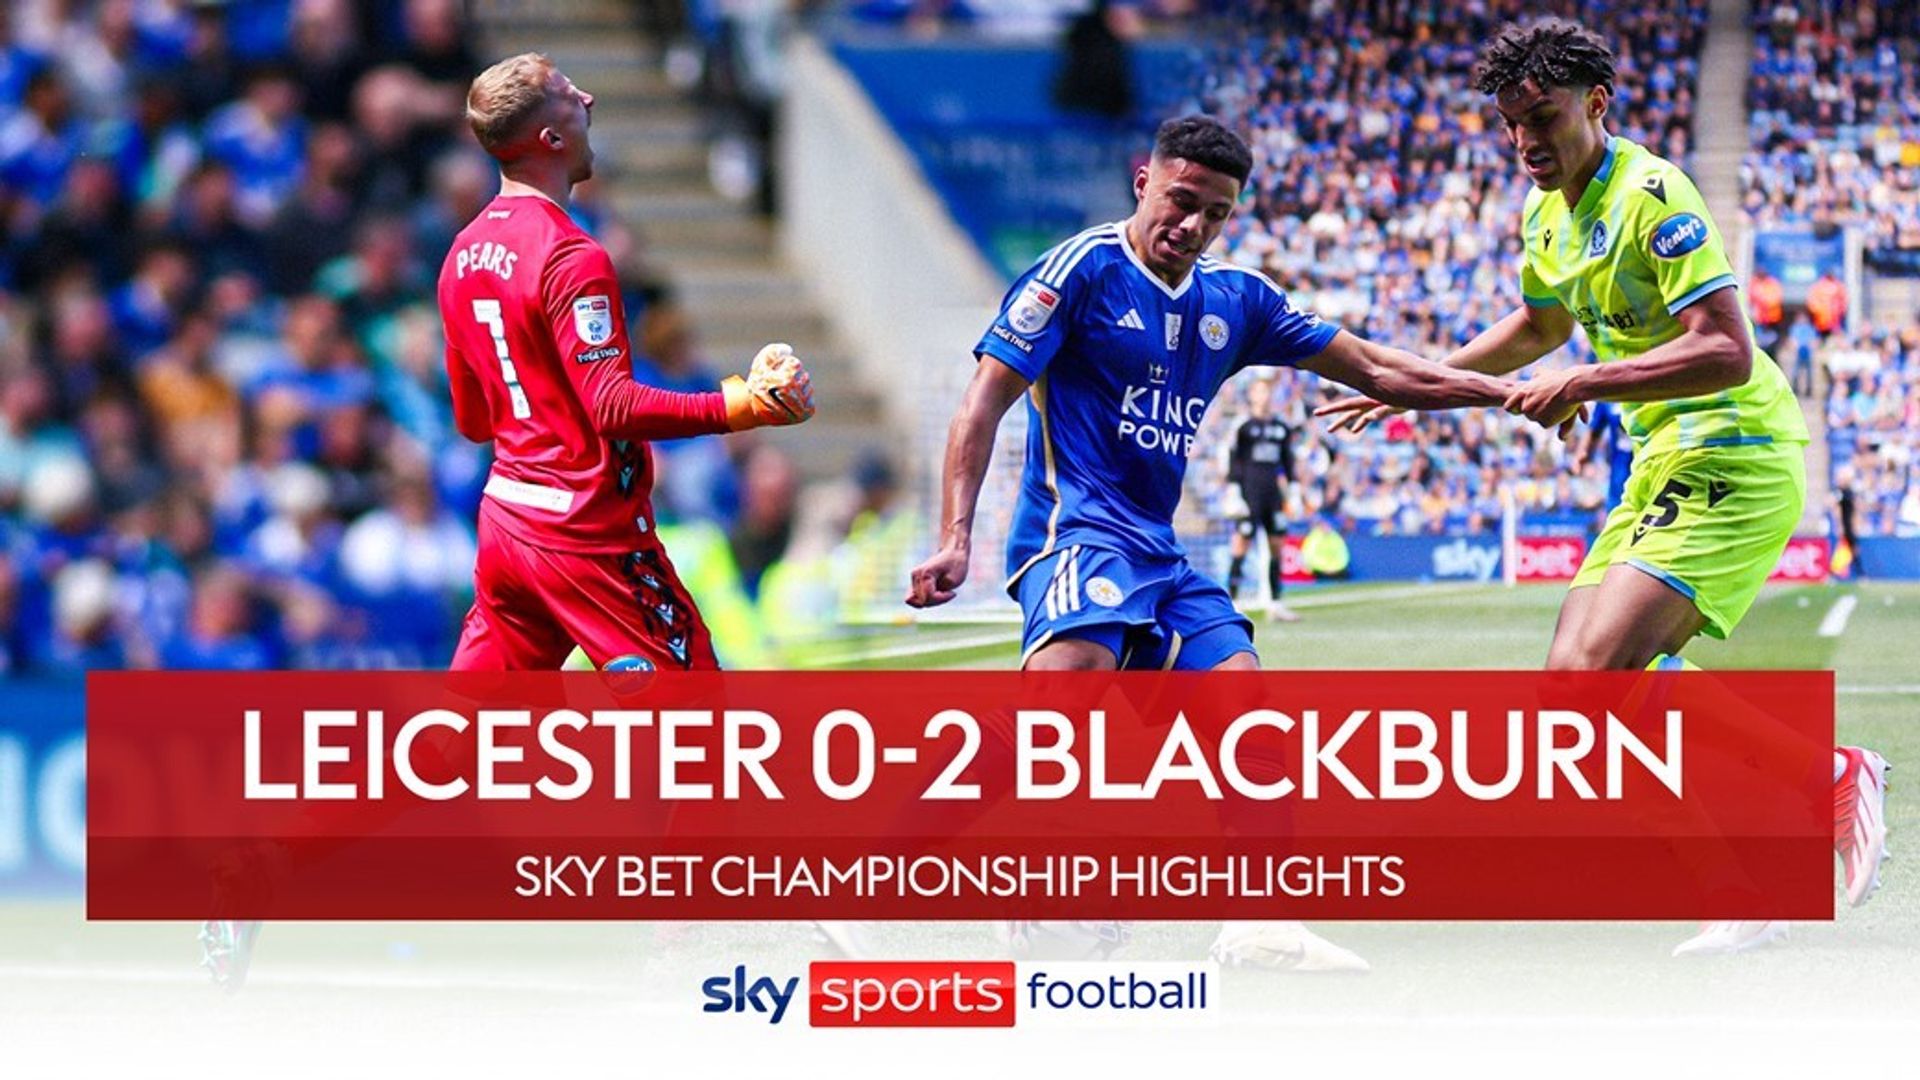 Blackburn survive relegation battle with win at Leicester